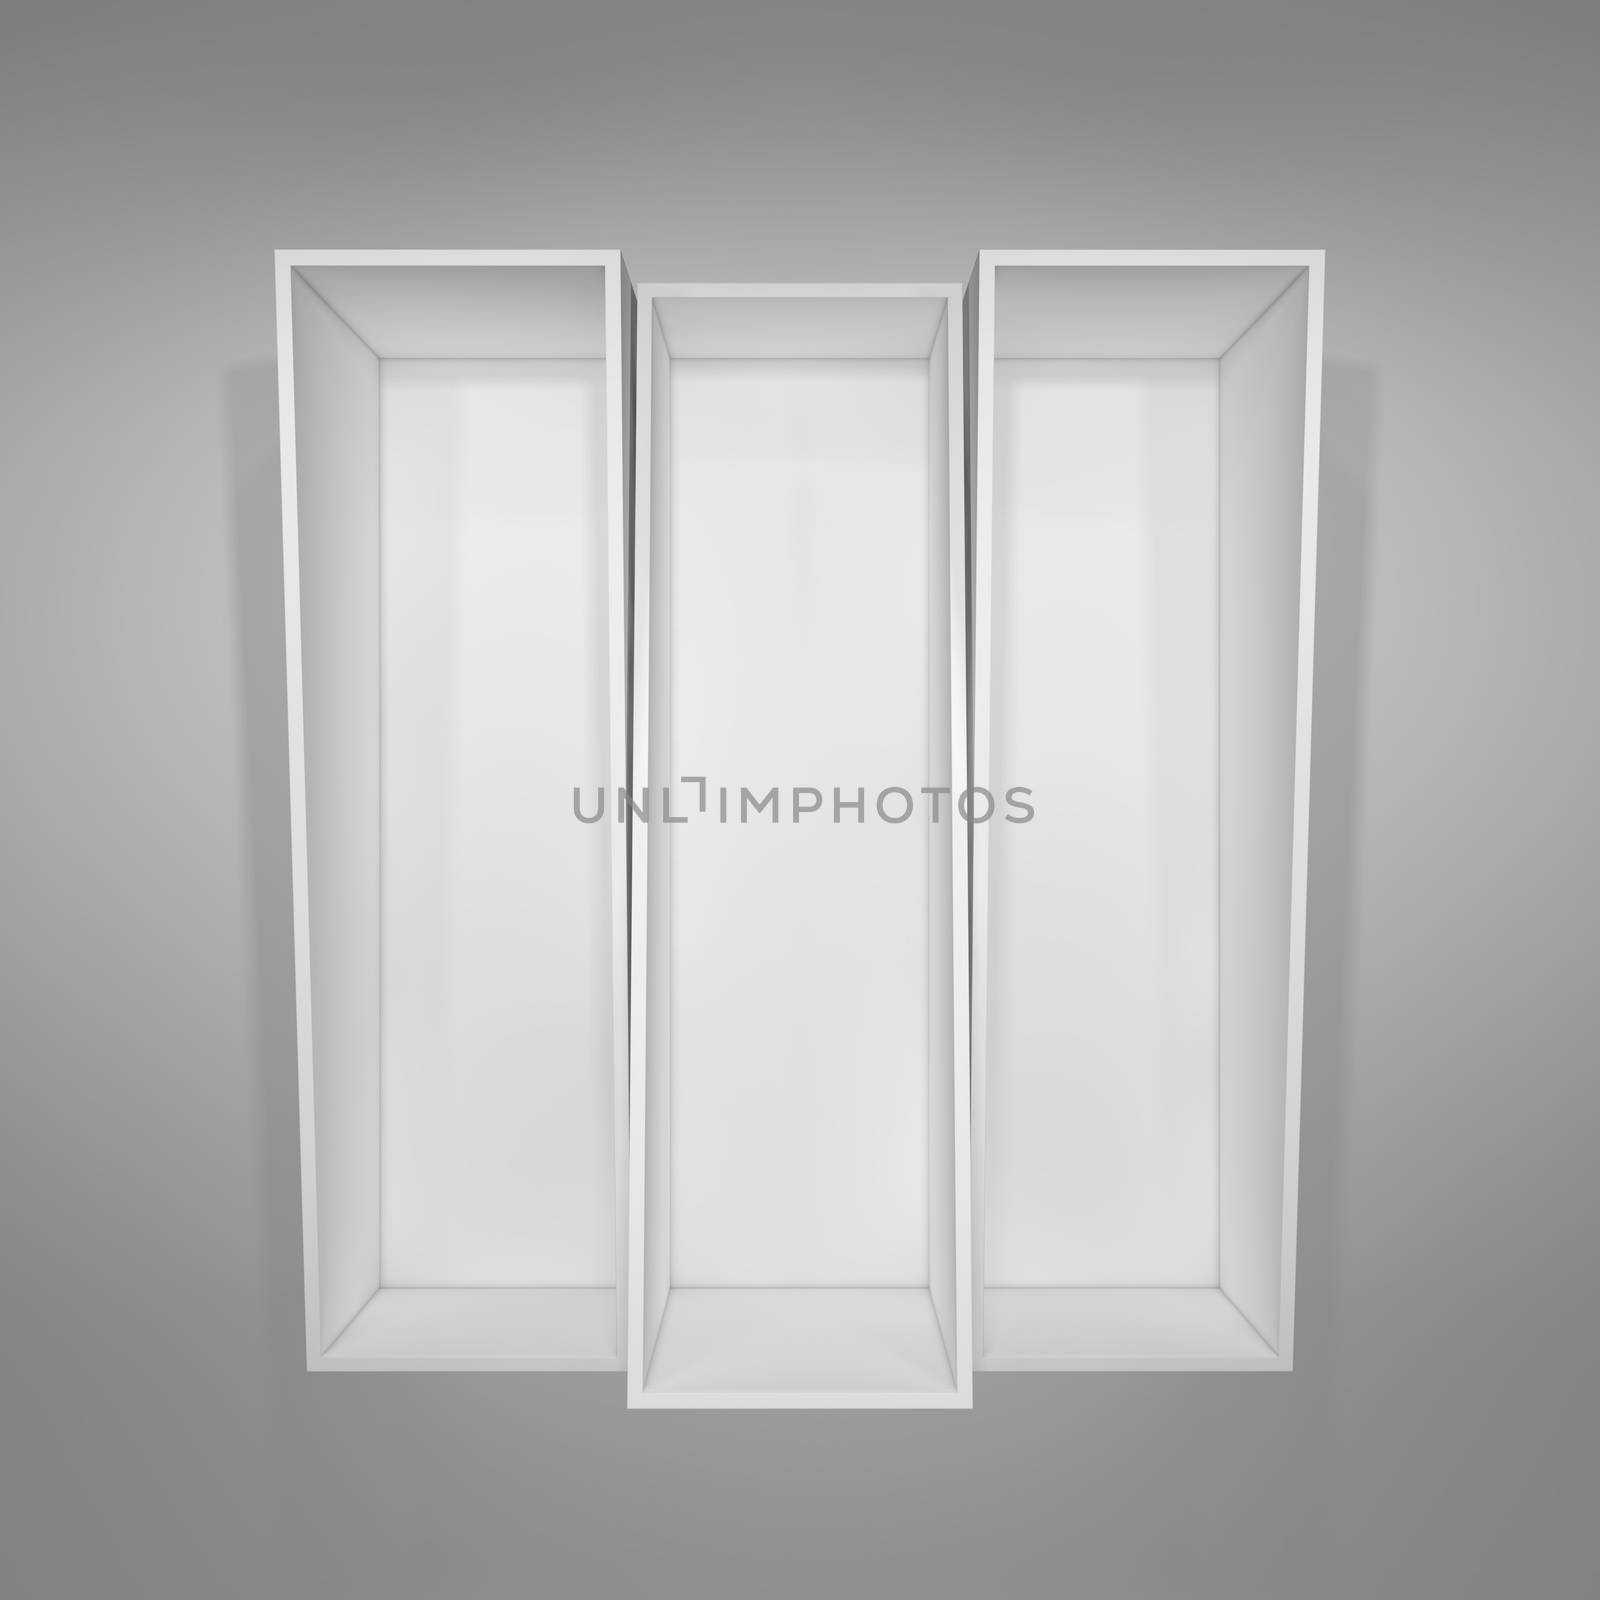 Illuminated white shelf for presentations by cherezoff